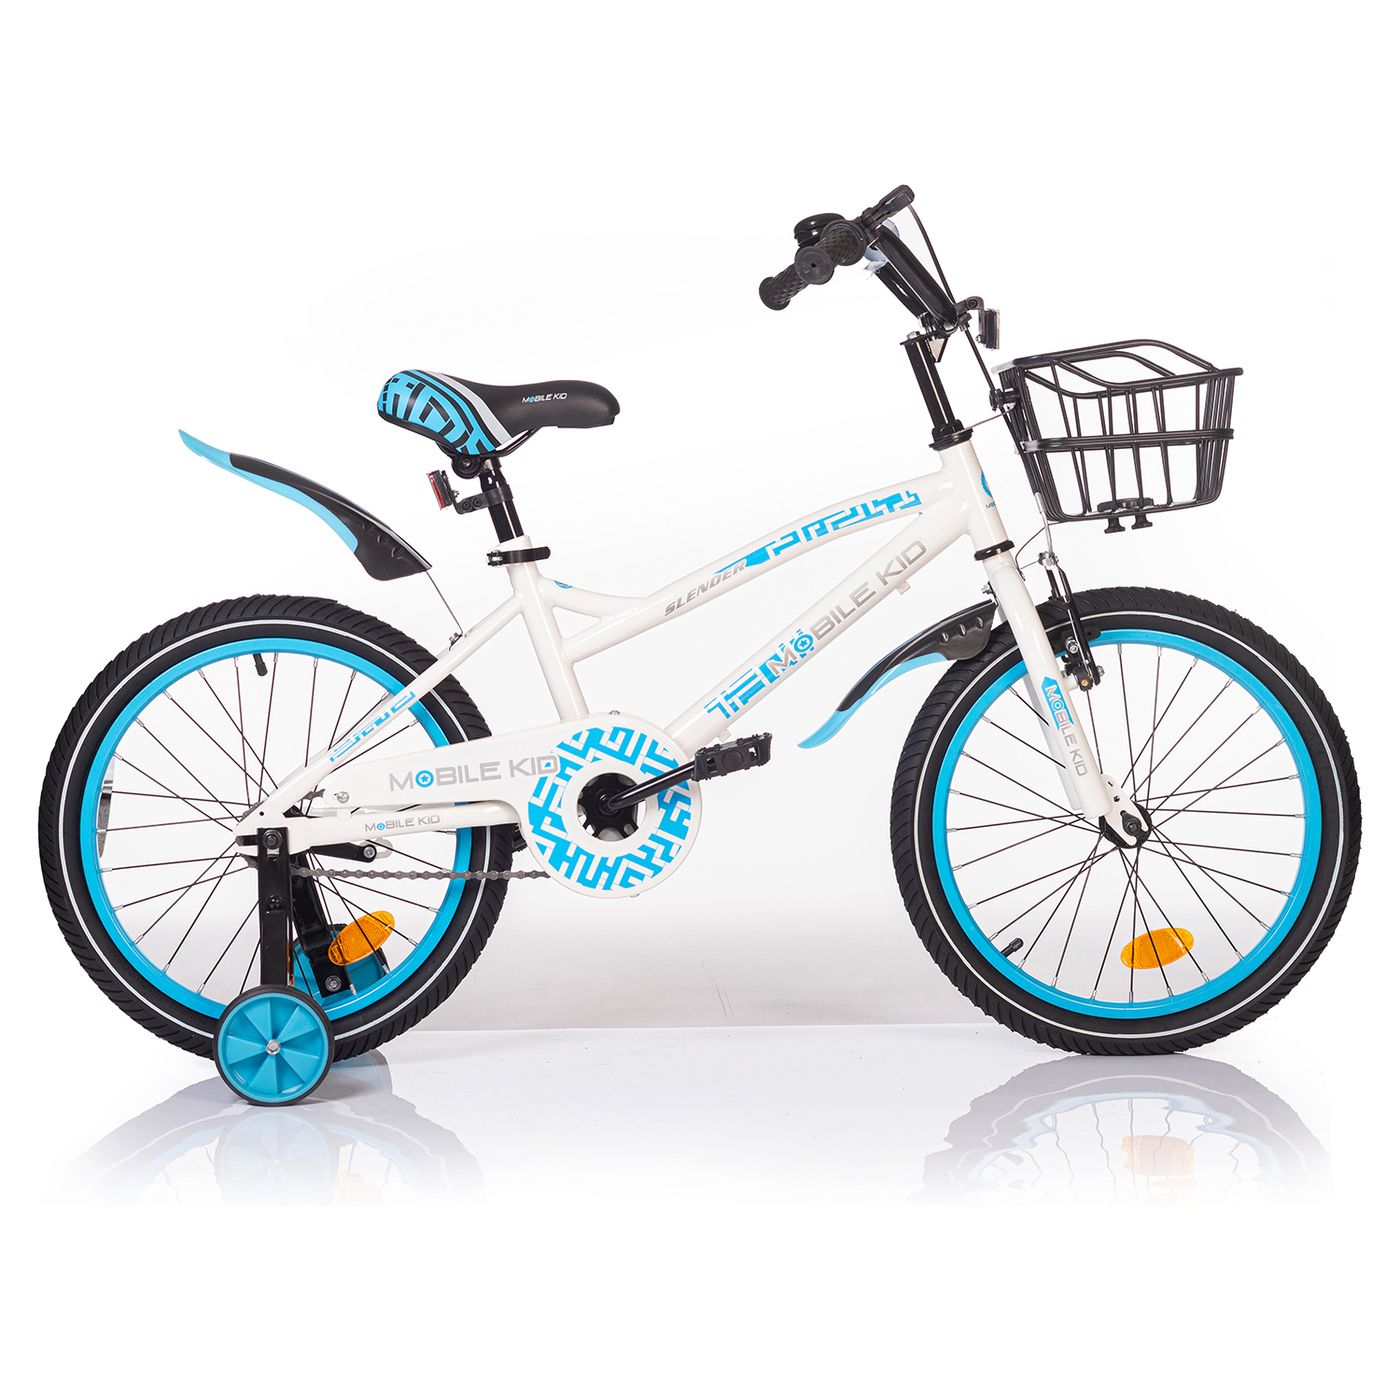 Велосипед Mobile Kid Slender 18 бело-голубой